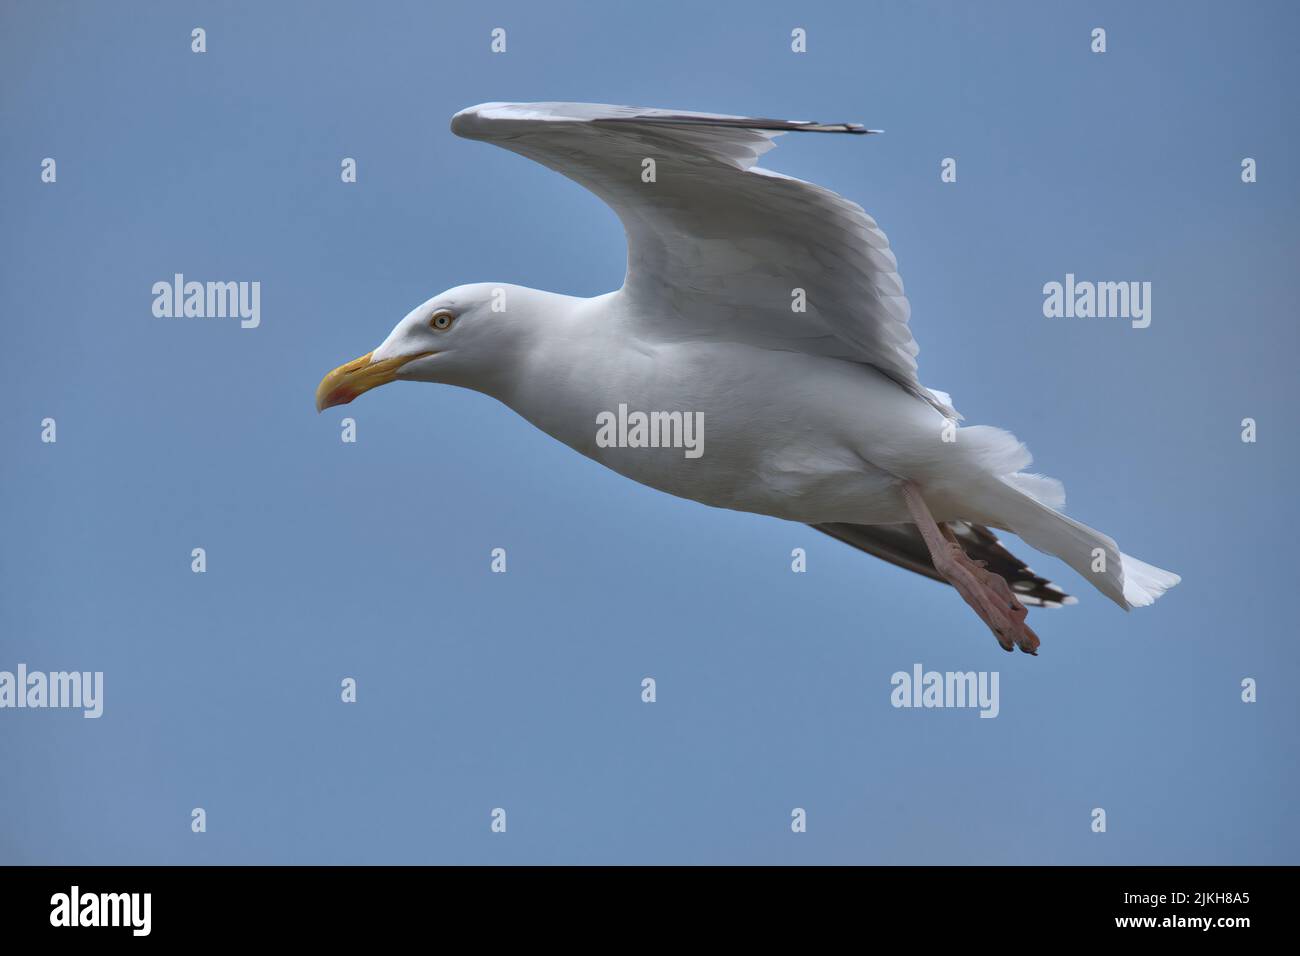 European herring gull in flight with blue sky background Stock Photo